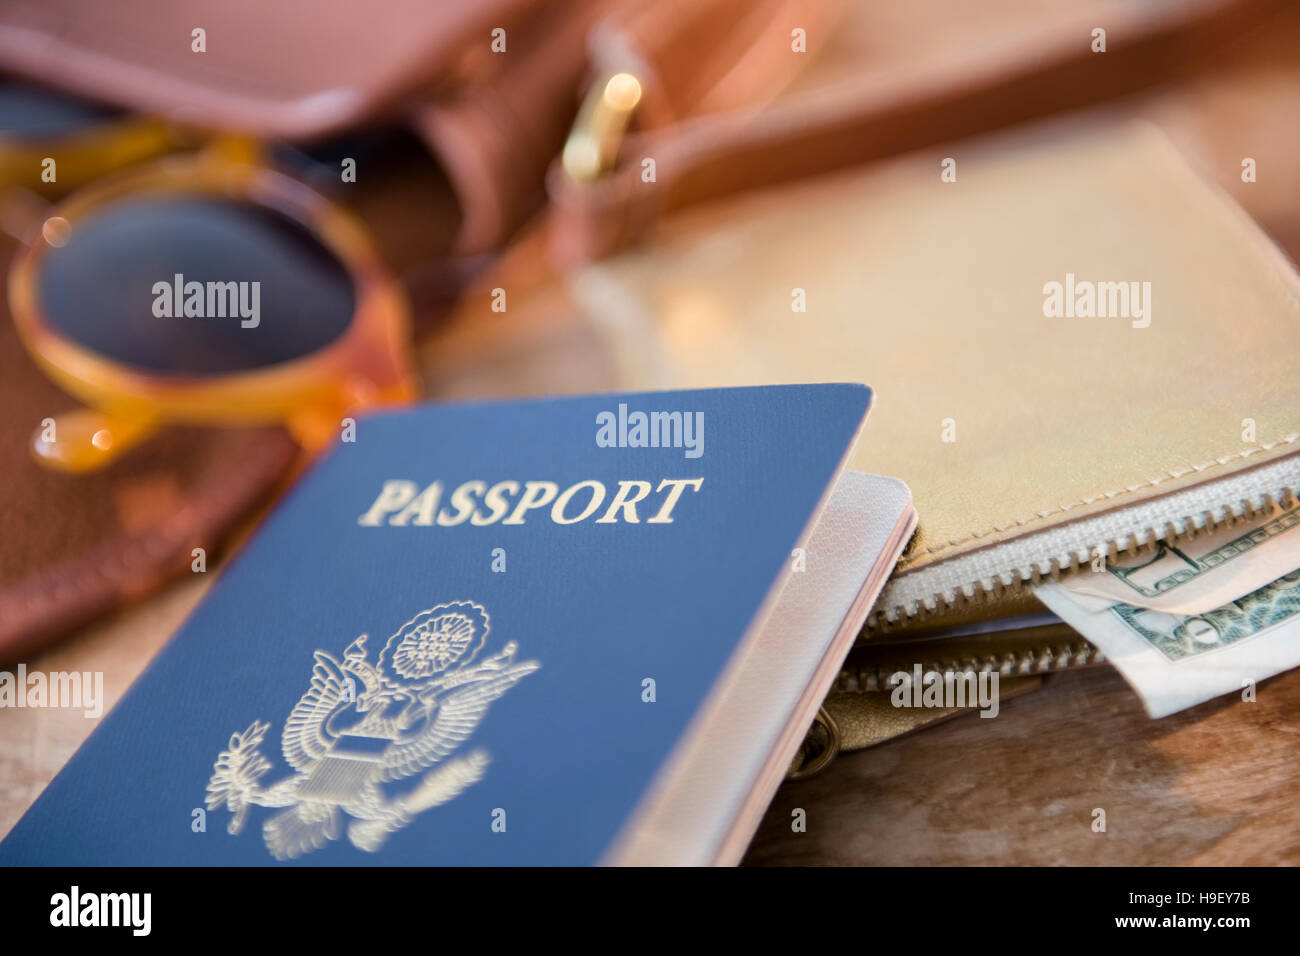 Passport, wallet and sunglasses Stock Photo